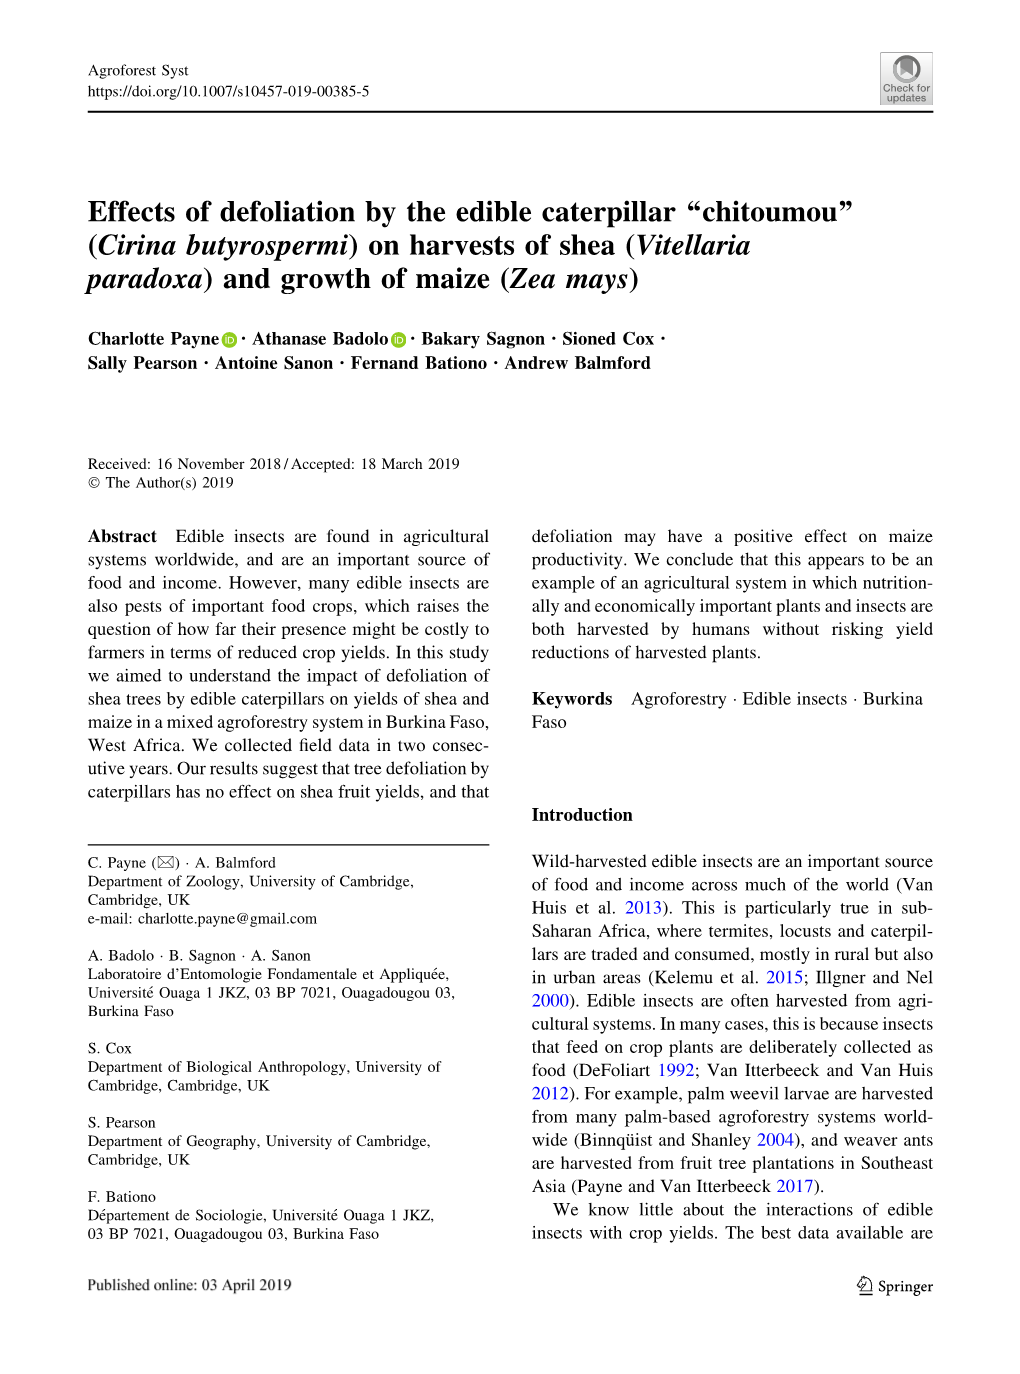 Effects of Defoliation by the Edible Caterpillar “Chitoumou” (Cirina